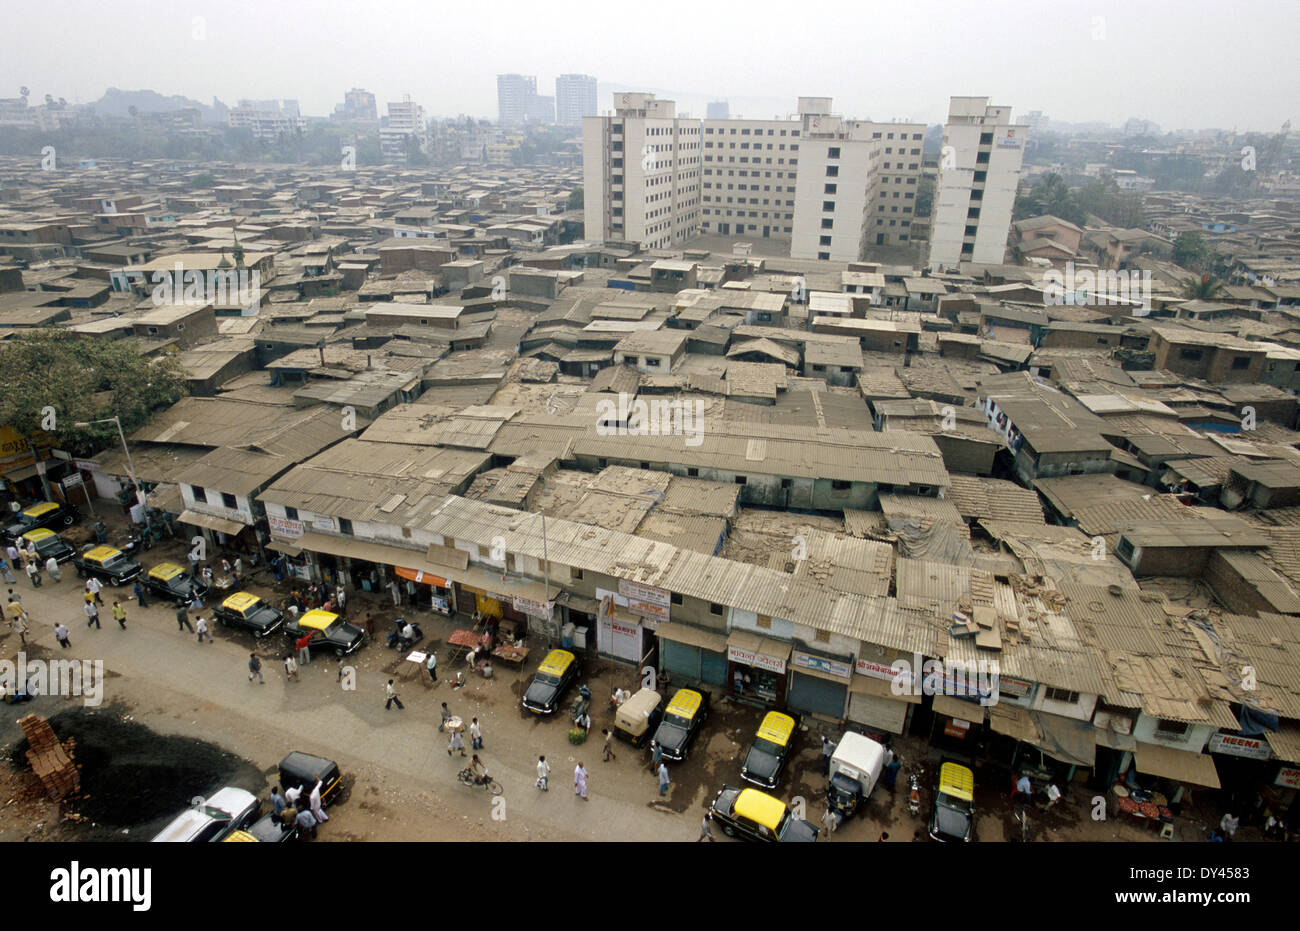 india-mumbai-slum-dharavi-the-largest-slum-in-asia-target-for-real-DY4583.jpg